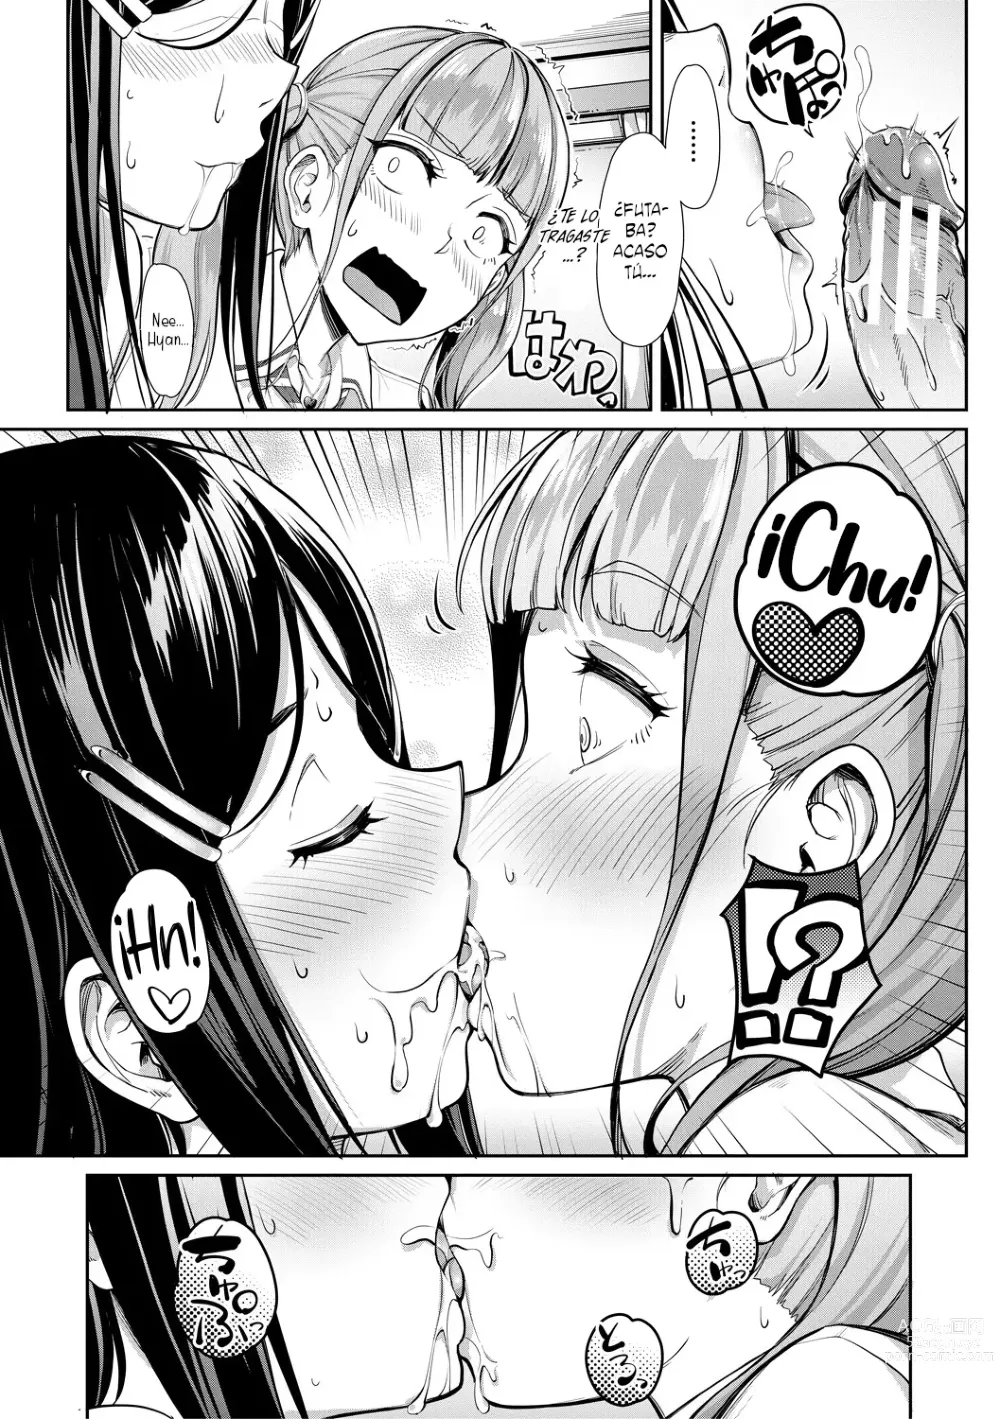 Page 16 of manga ¡Nee! ¡Nee! ¡Chantoshiyo!